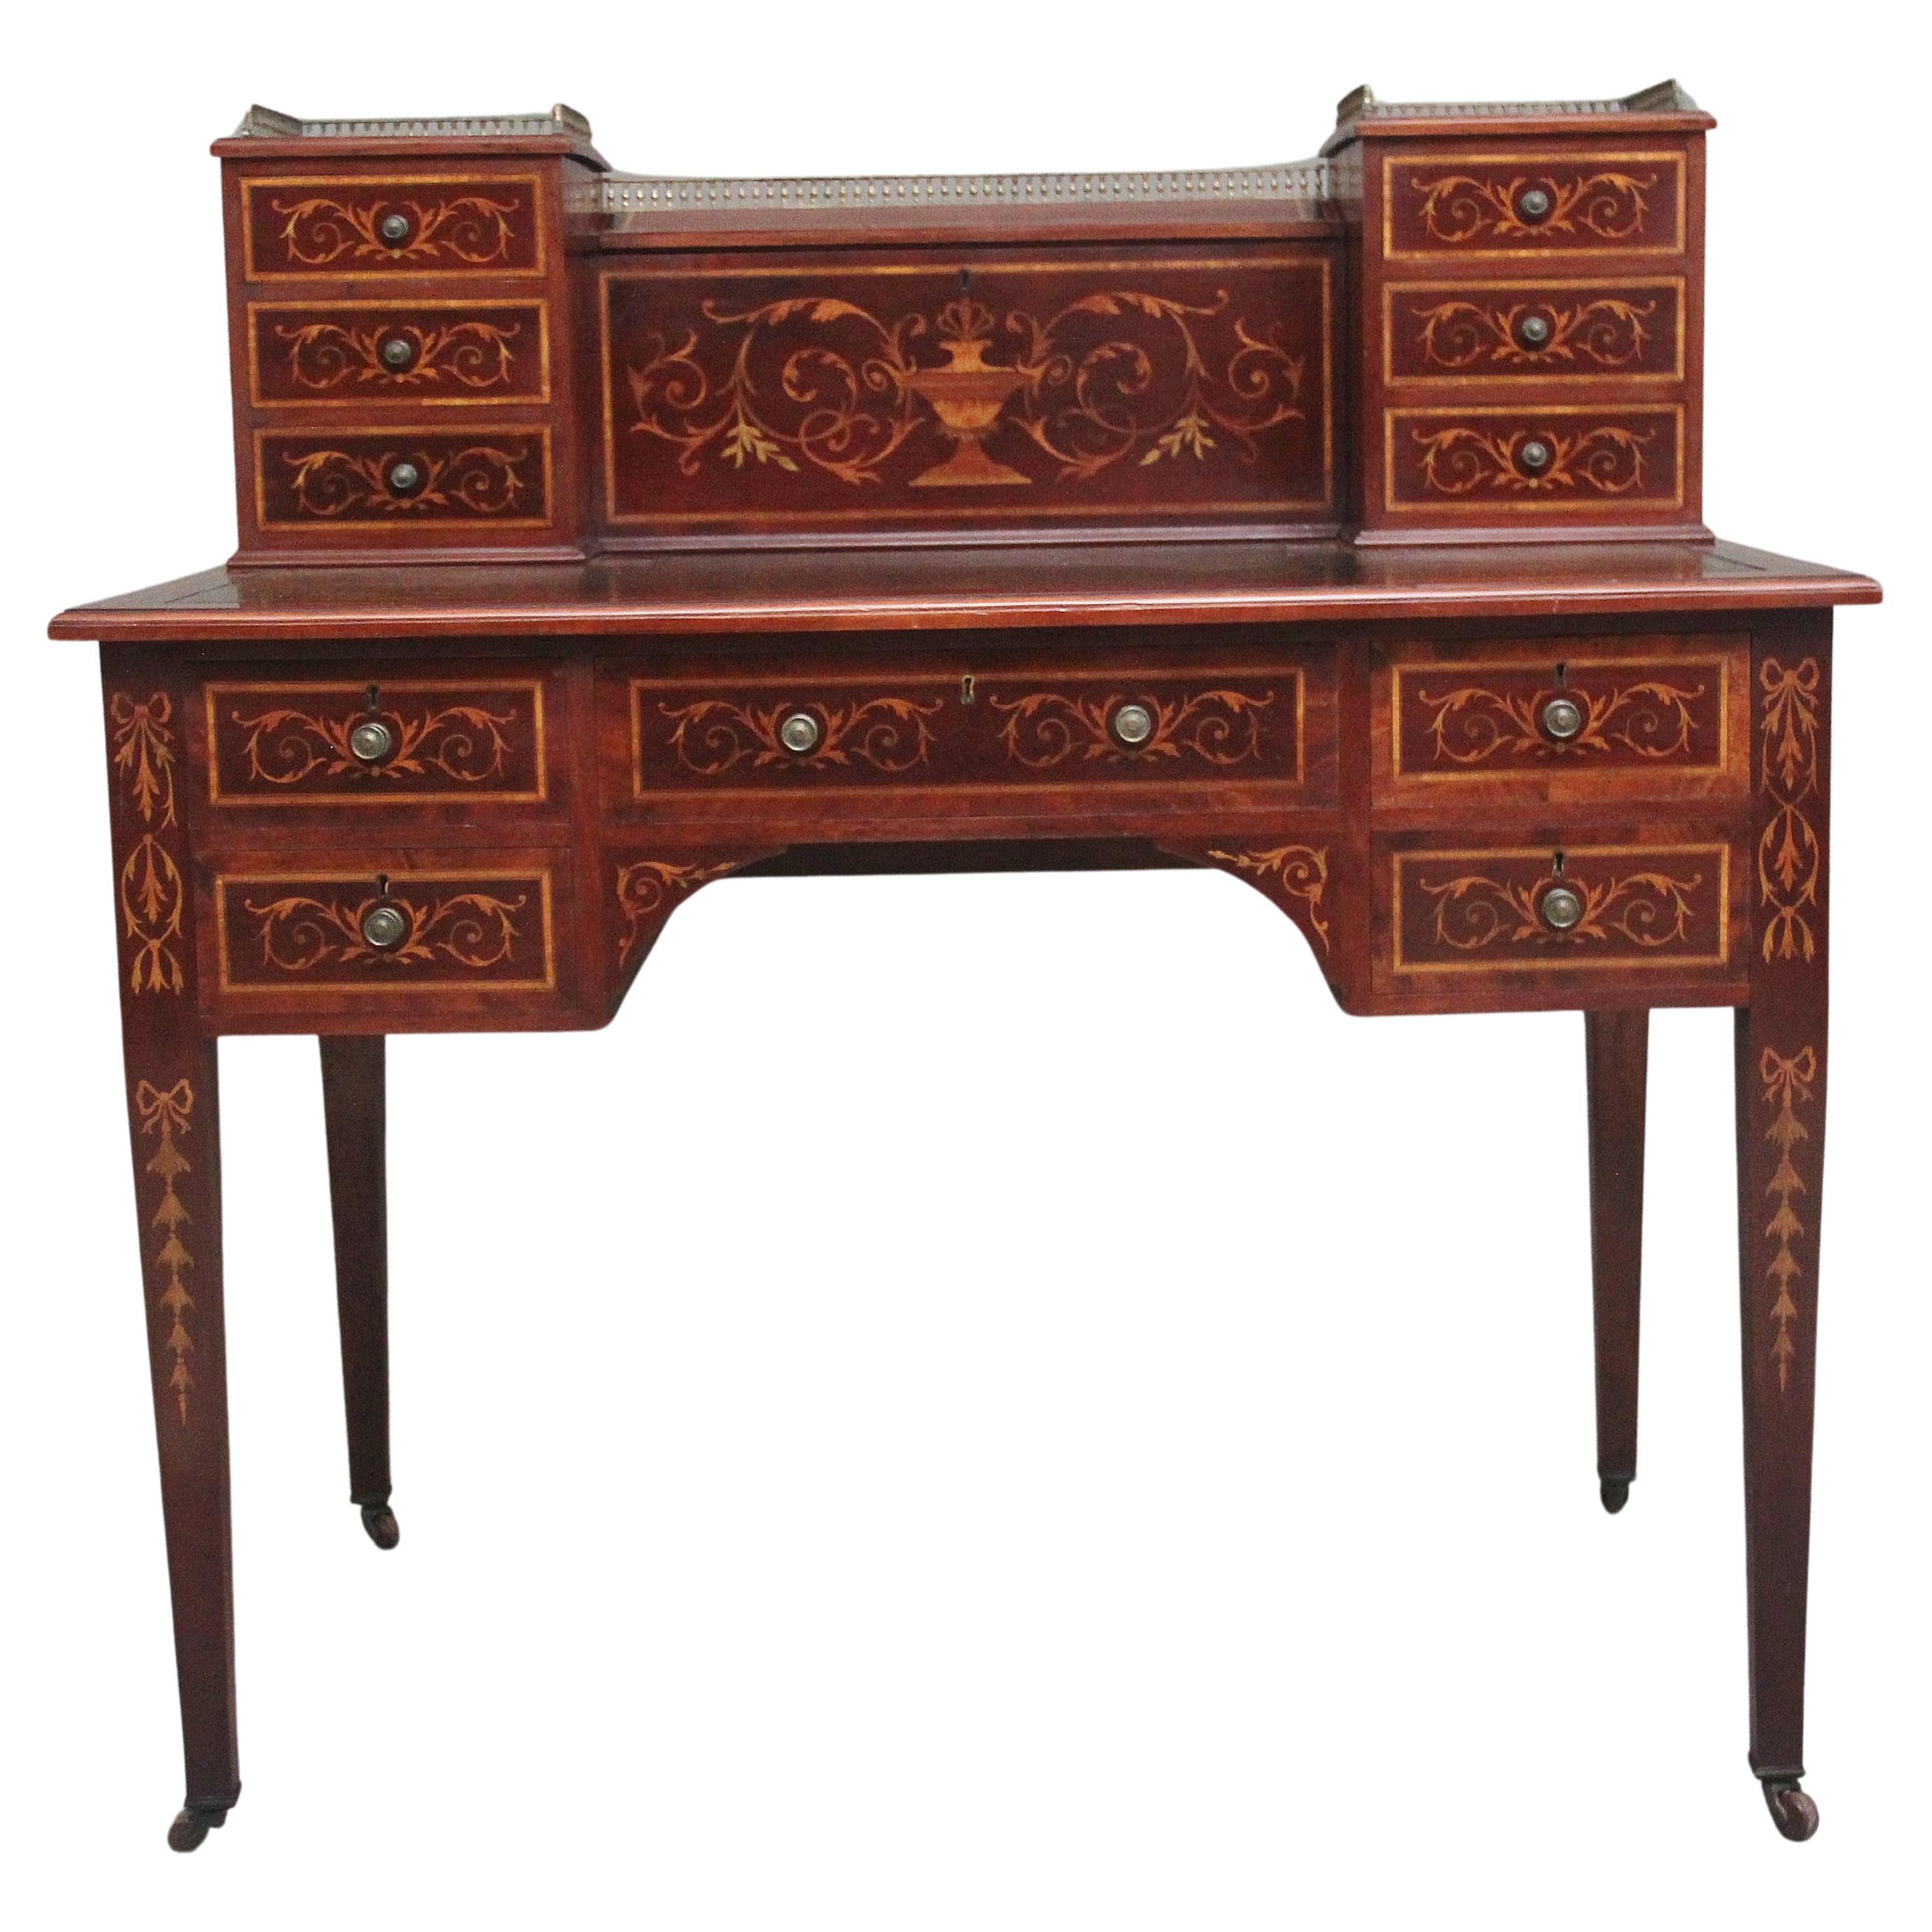 19th Century mahogany inlaid writing desk